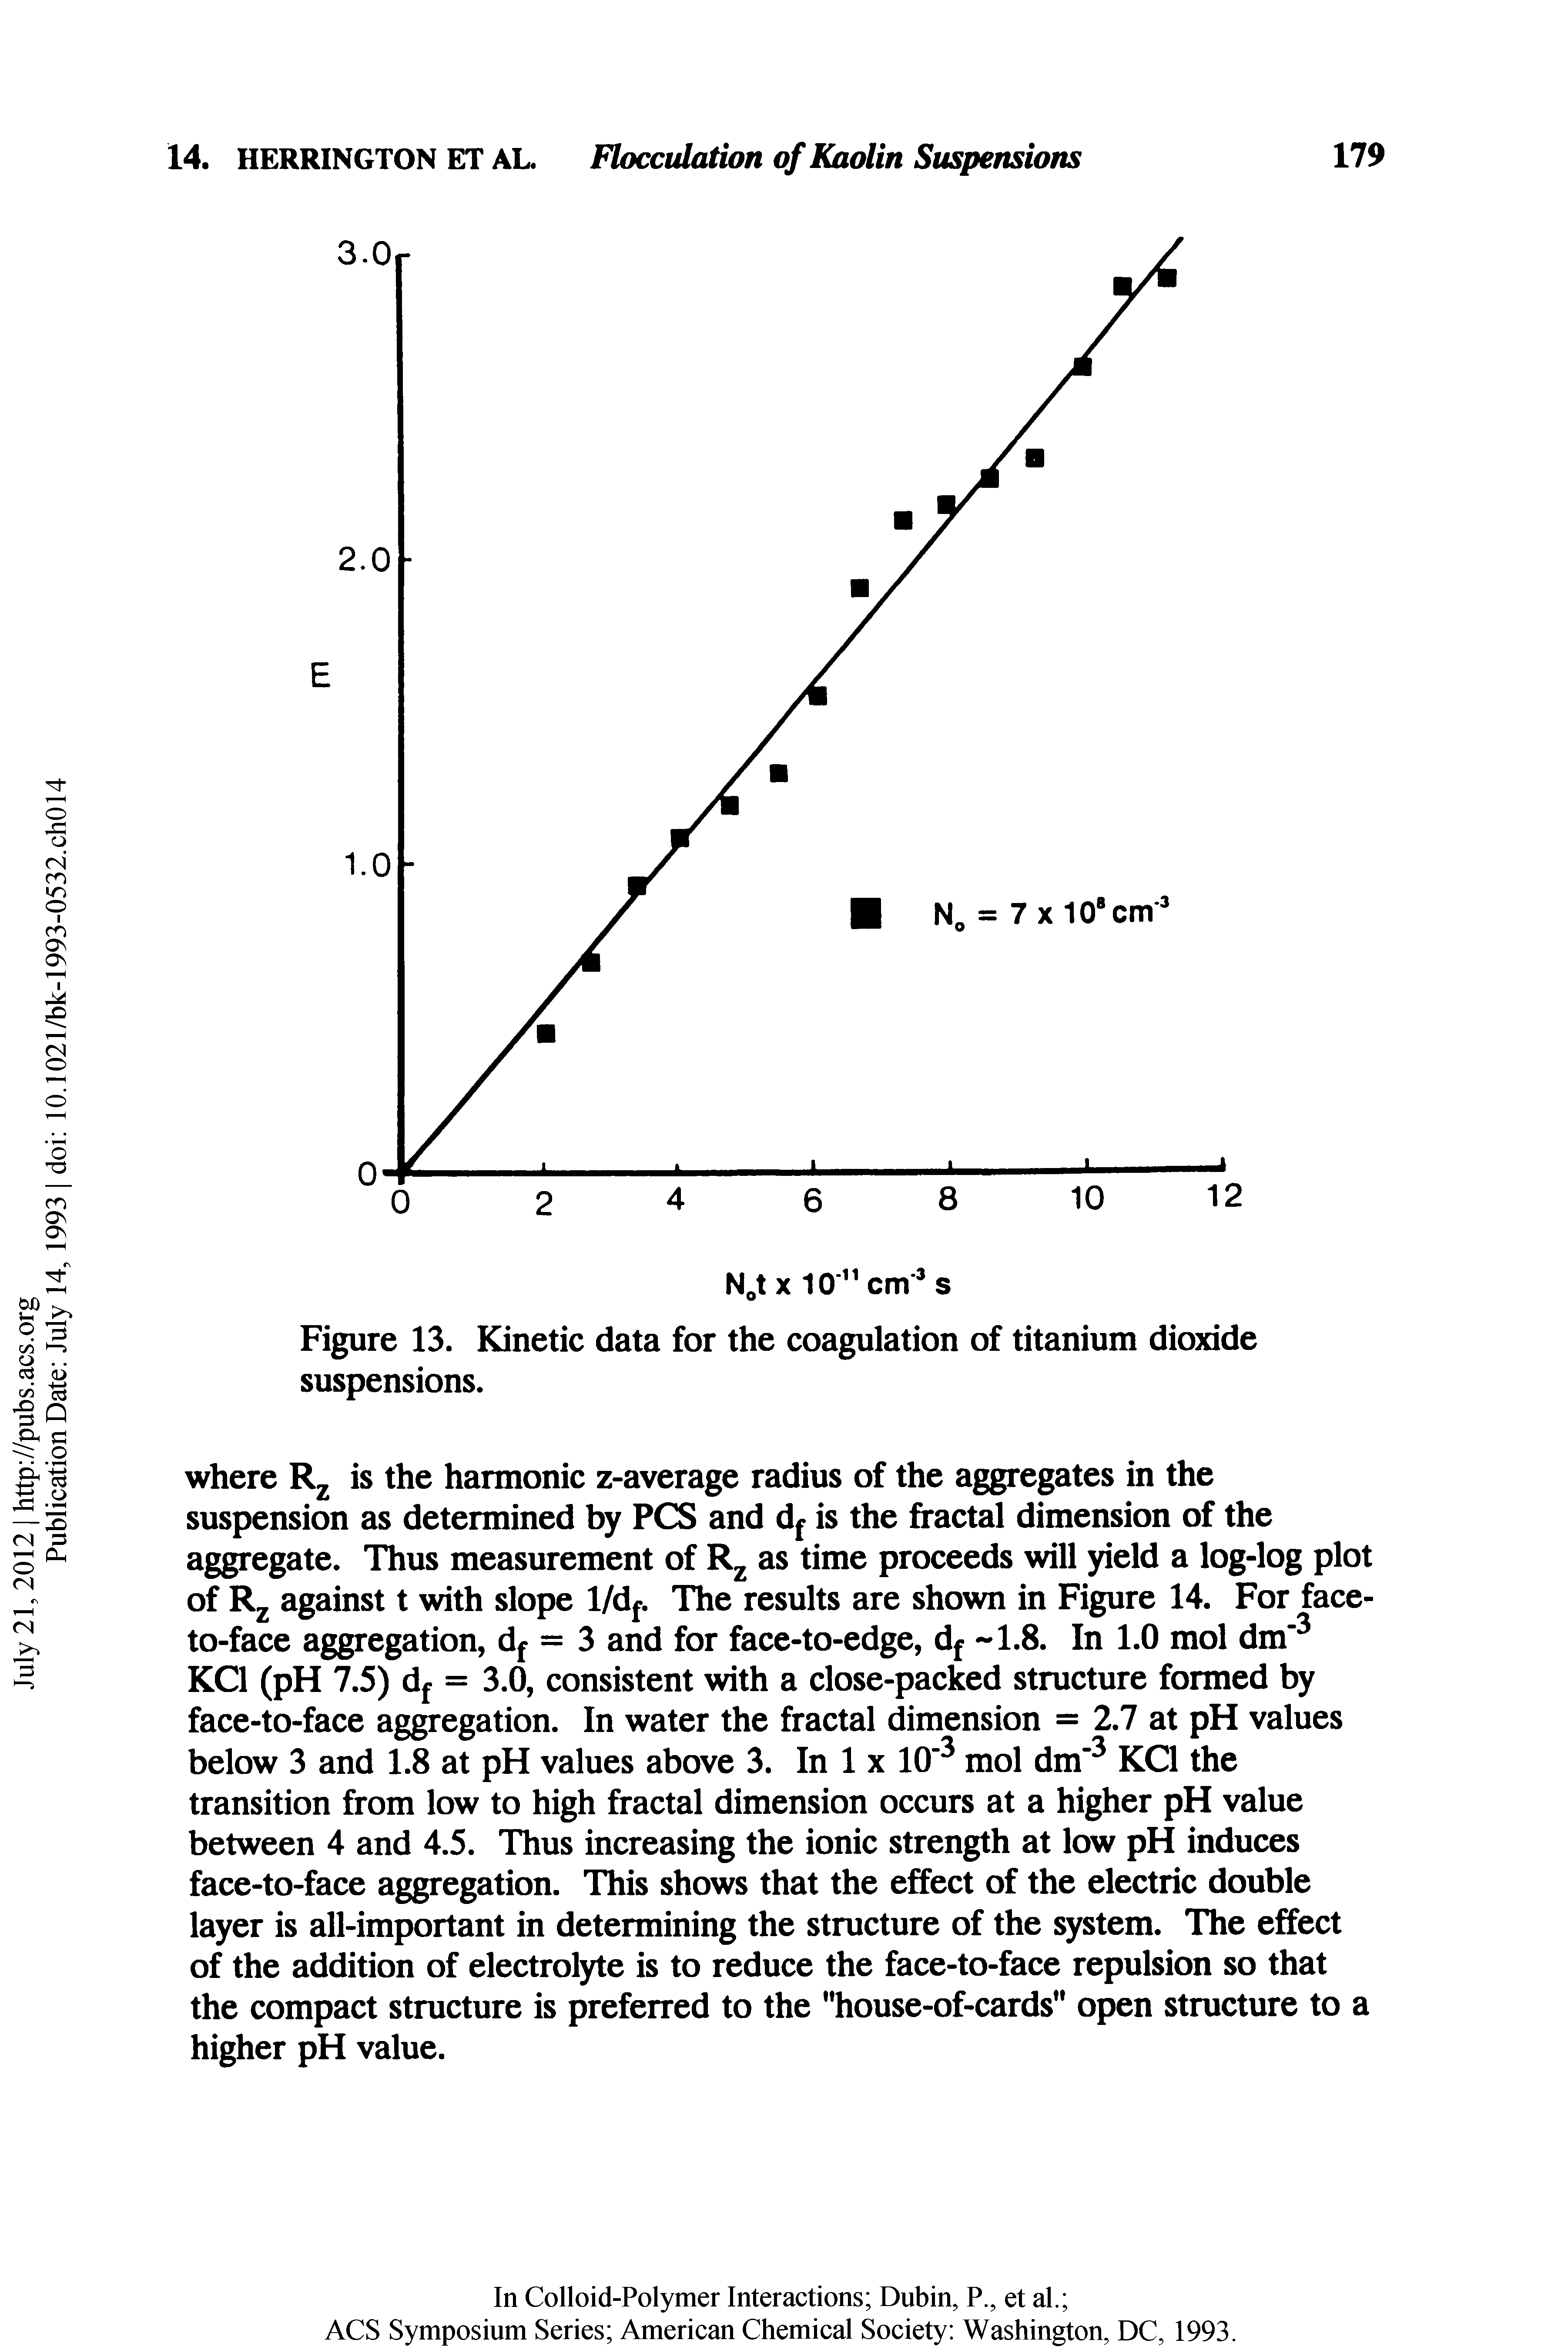 Figure 13. Kinetic data for the coagulation of titanium dioxide suspensions.